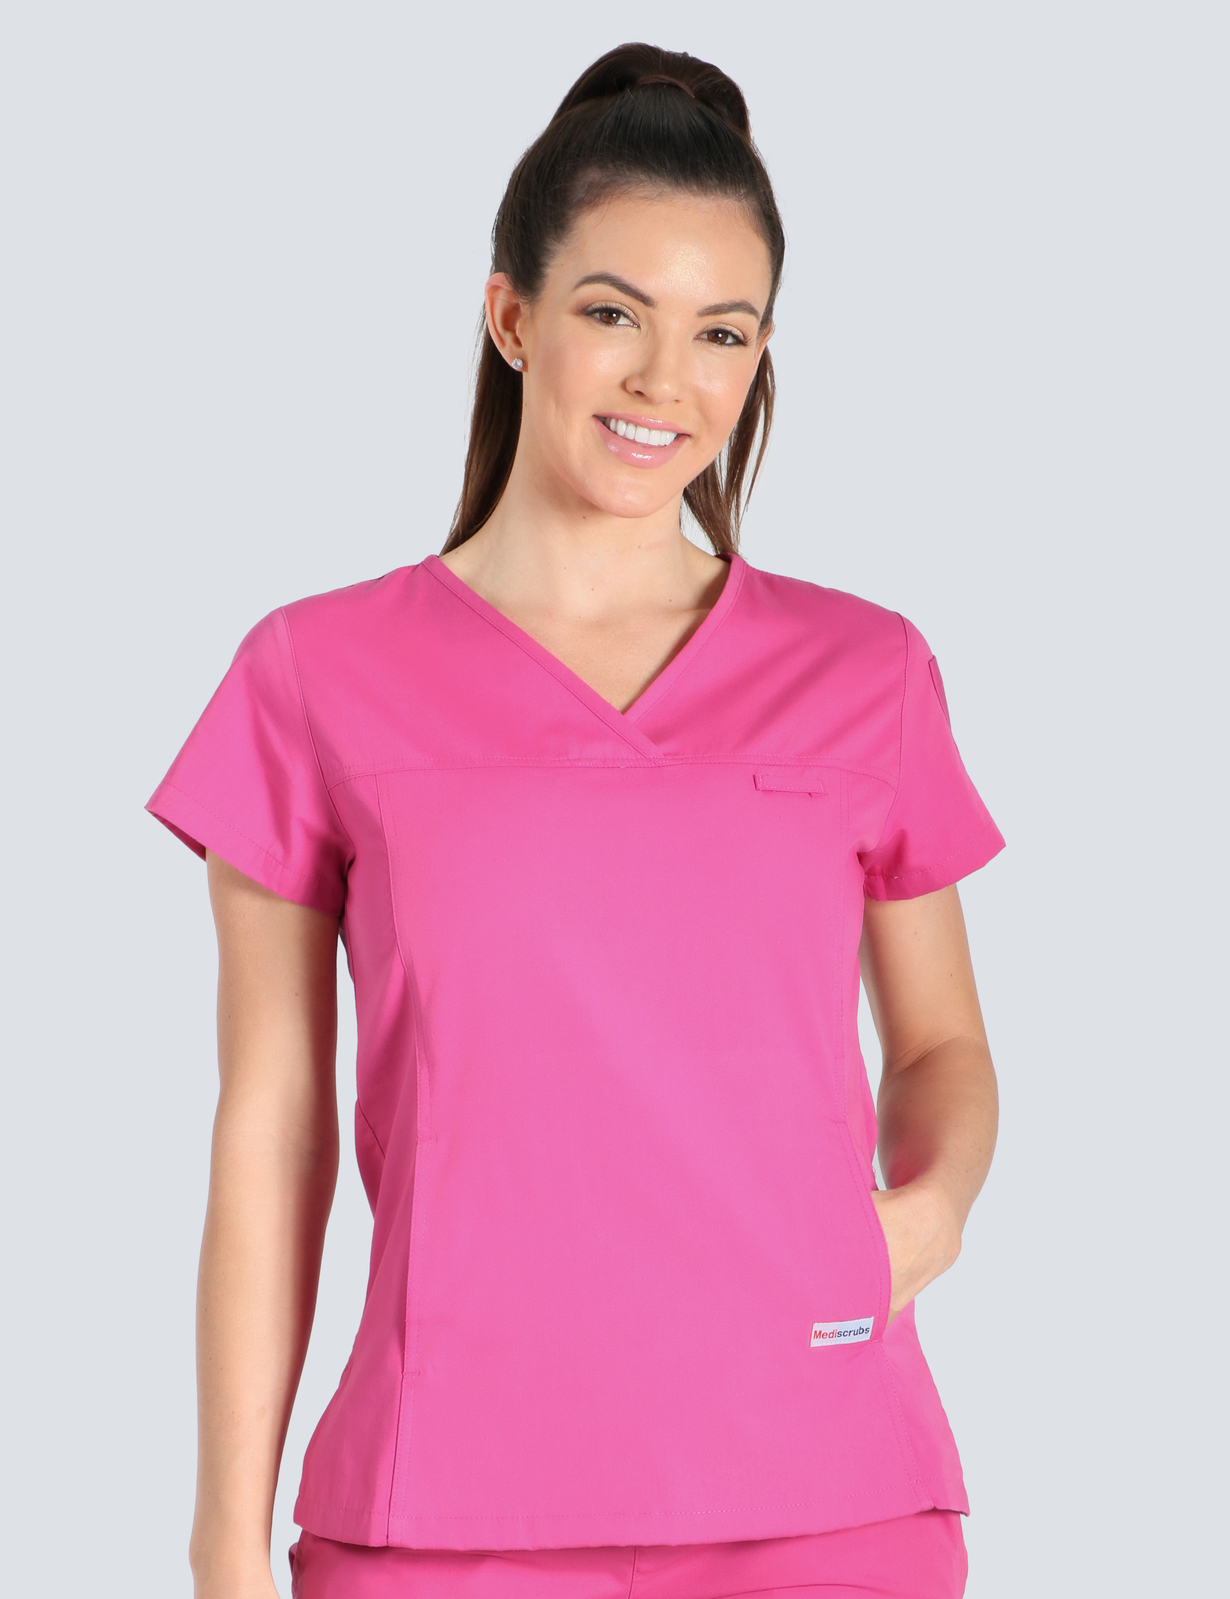 Queensland Children's Hospital Emergency Department Enrolled Nurse Uniform Top Bundle  (Women's Fit Top in Pink incl Logos)